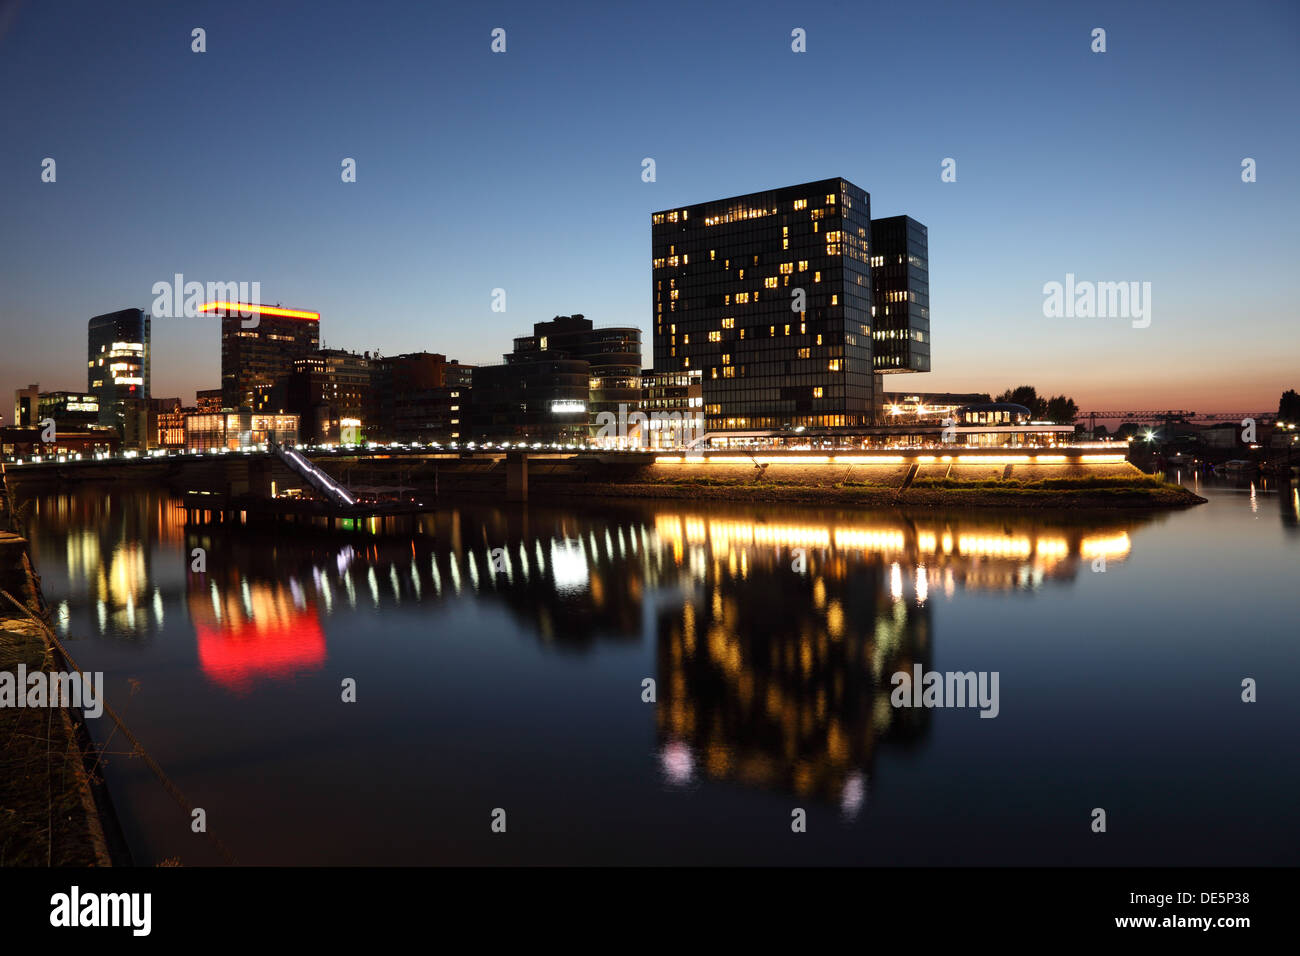 Night view of the Dusseldorf Media Harbor (Medienhafen) in Germany Stock Photo